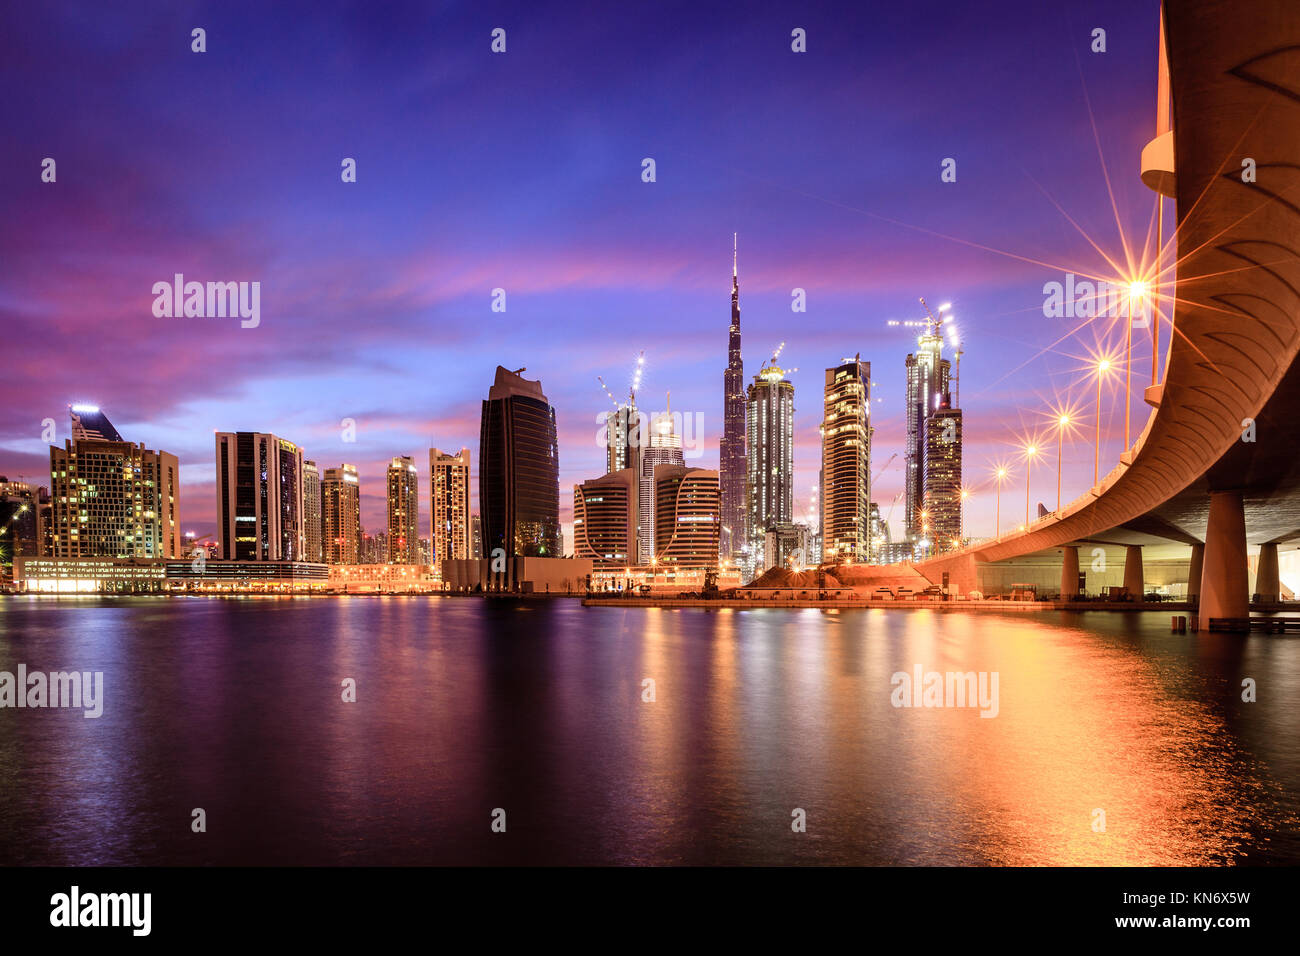 View of Dubai downtown skyline at night Stock Photo